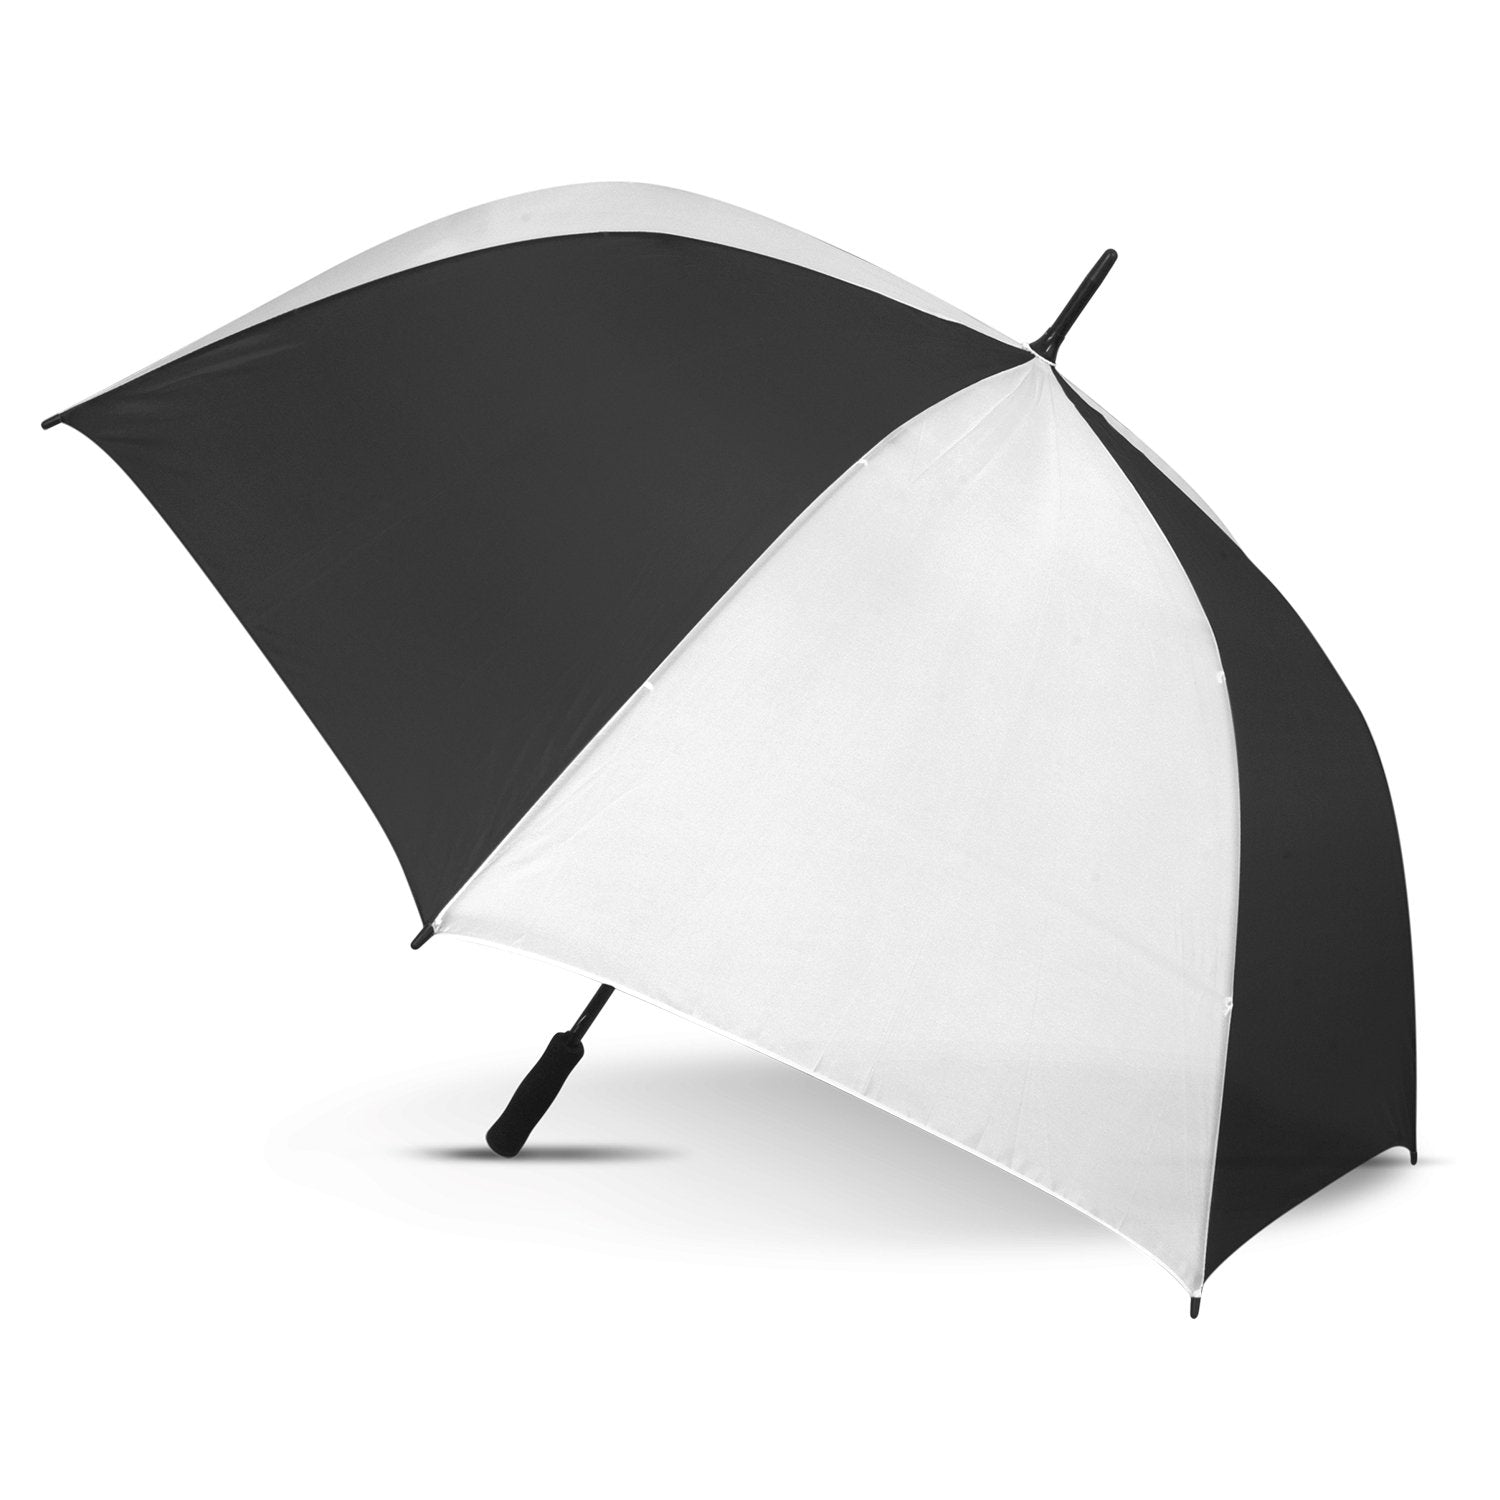 STORM-PROOF®️-premium-sports-umbrella-auto-open-white-and-black-umbrella